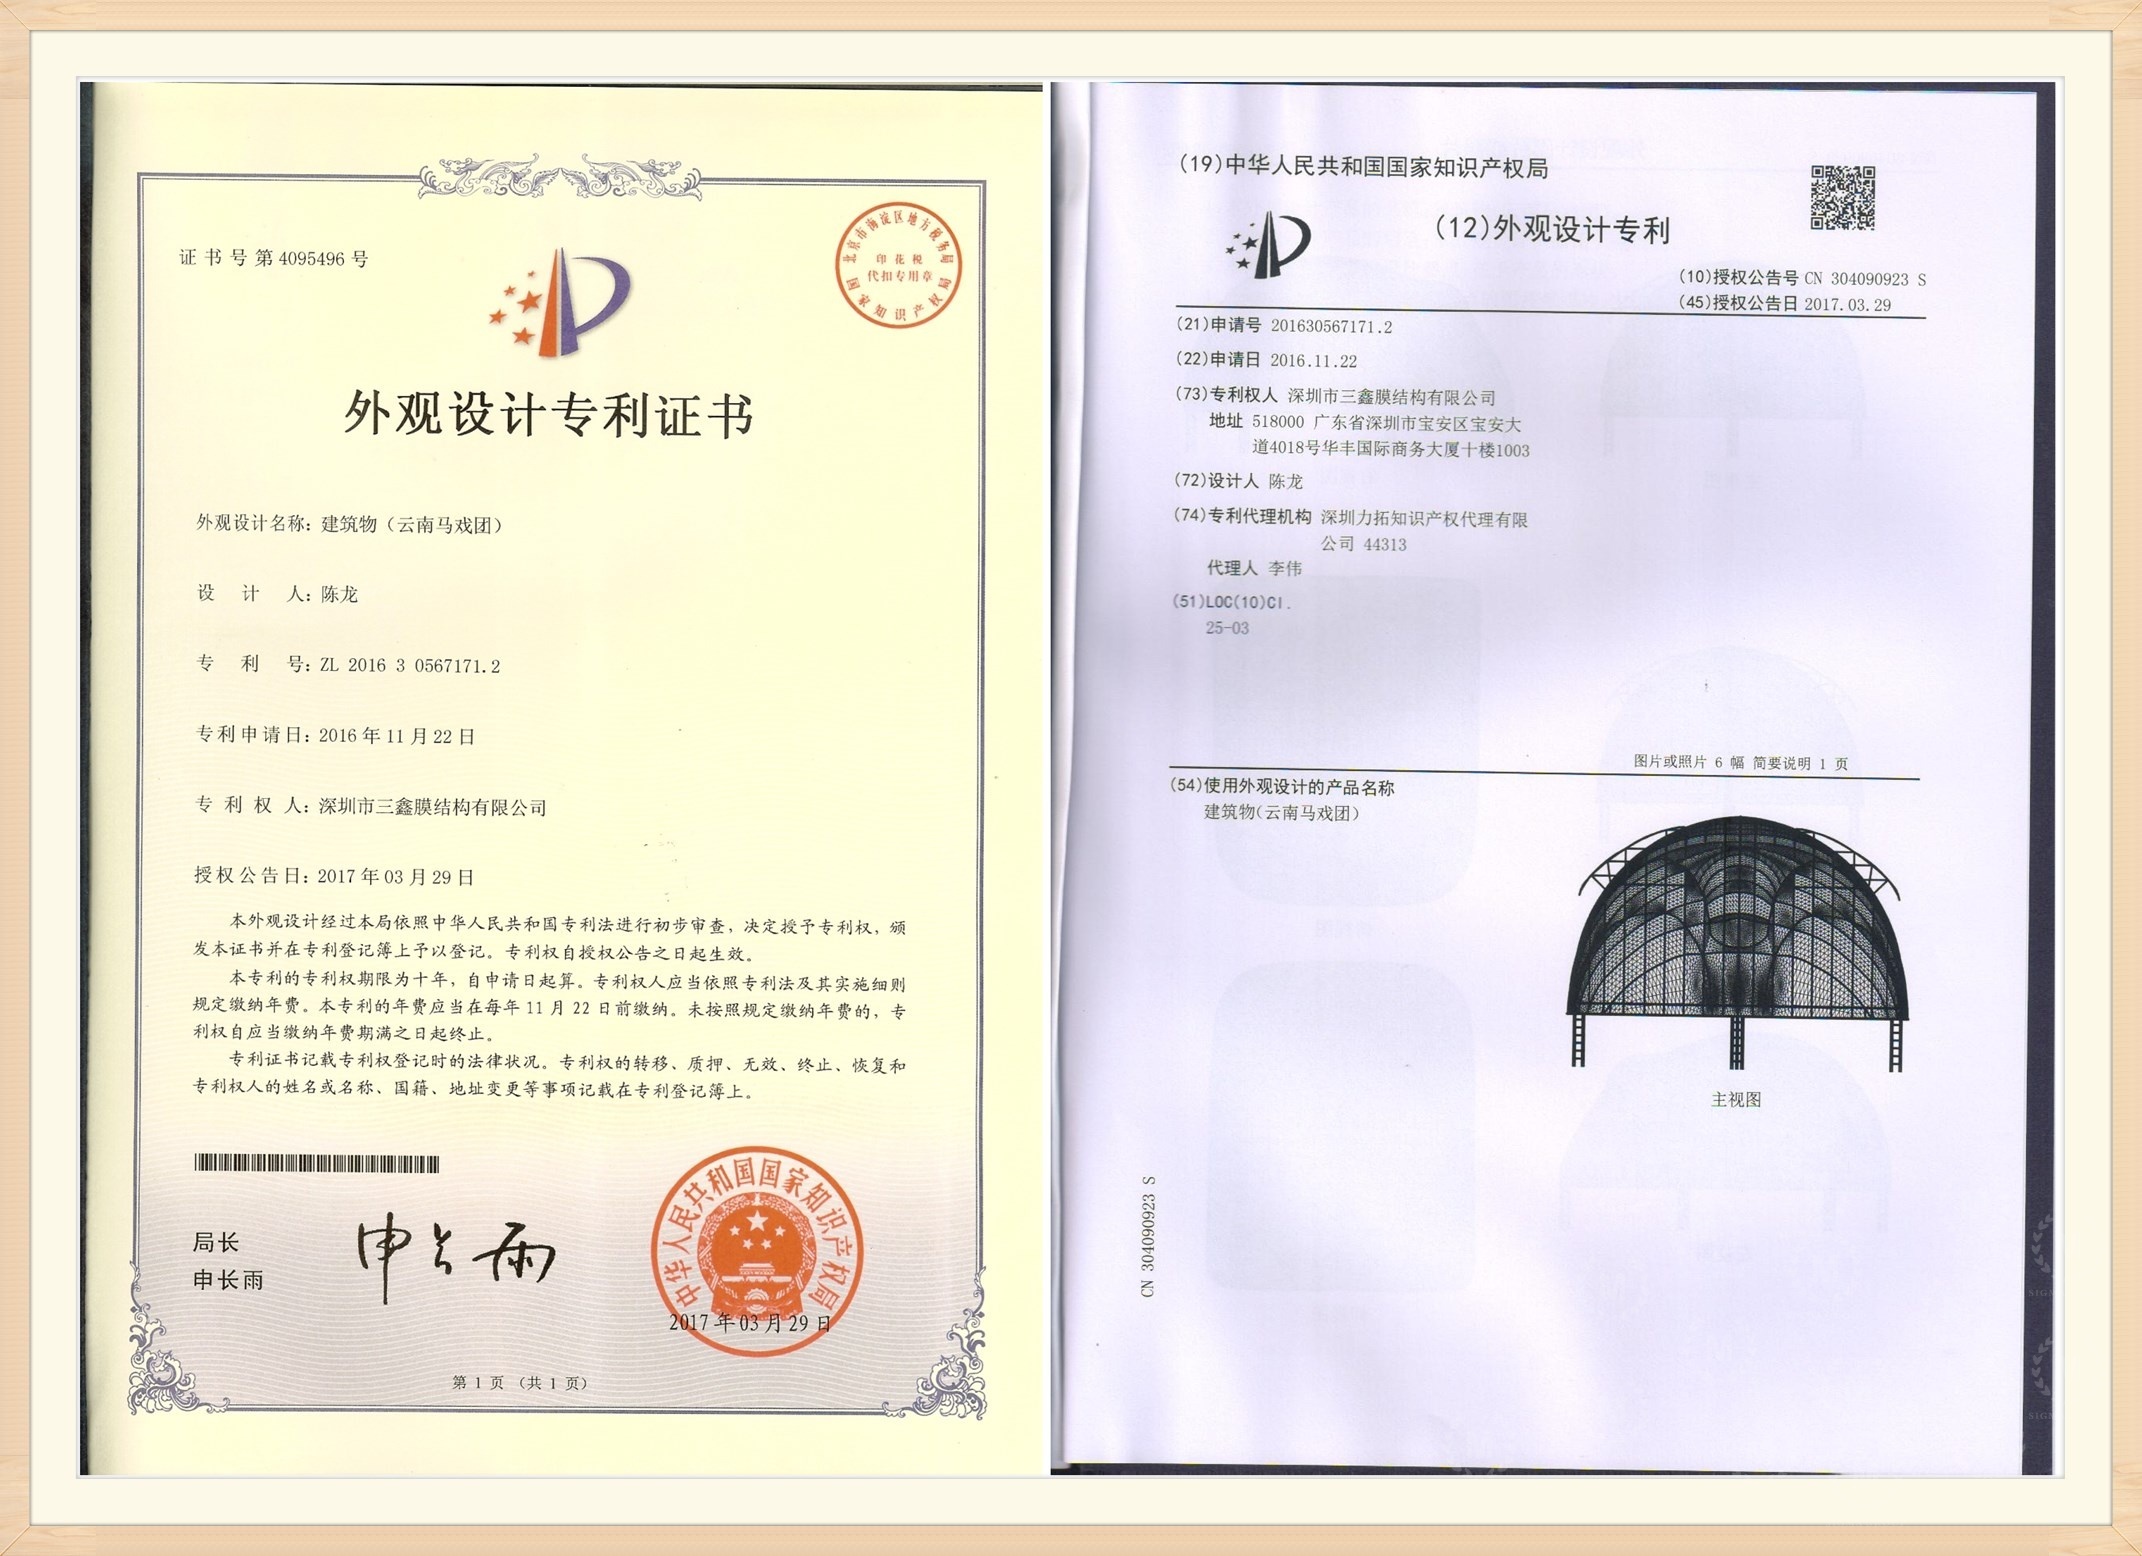 Certificate of Design Patent